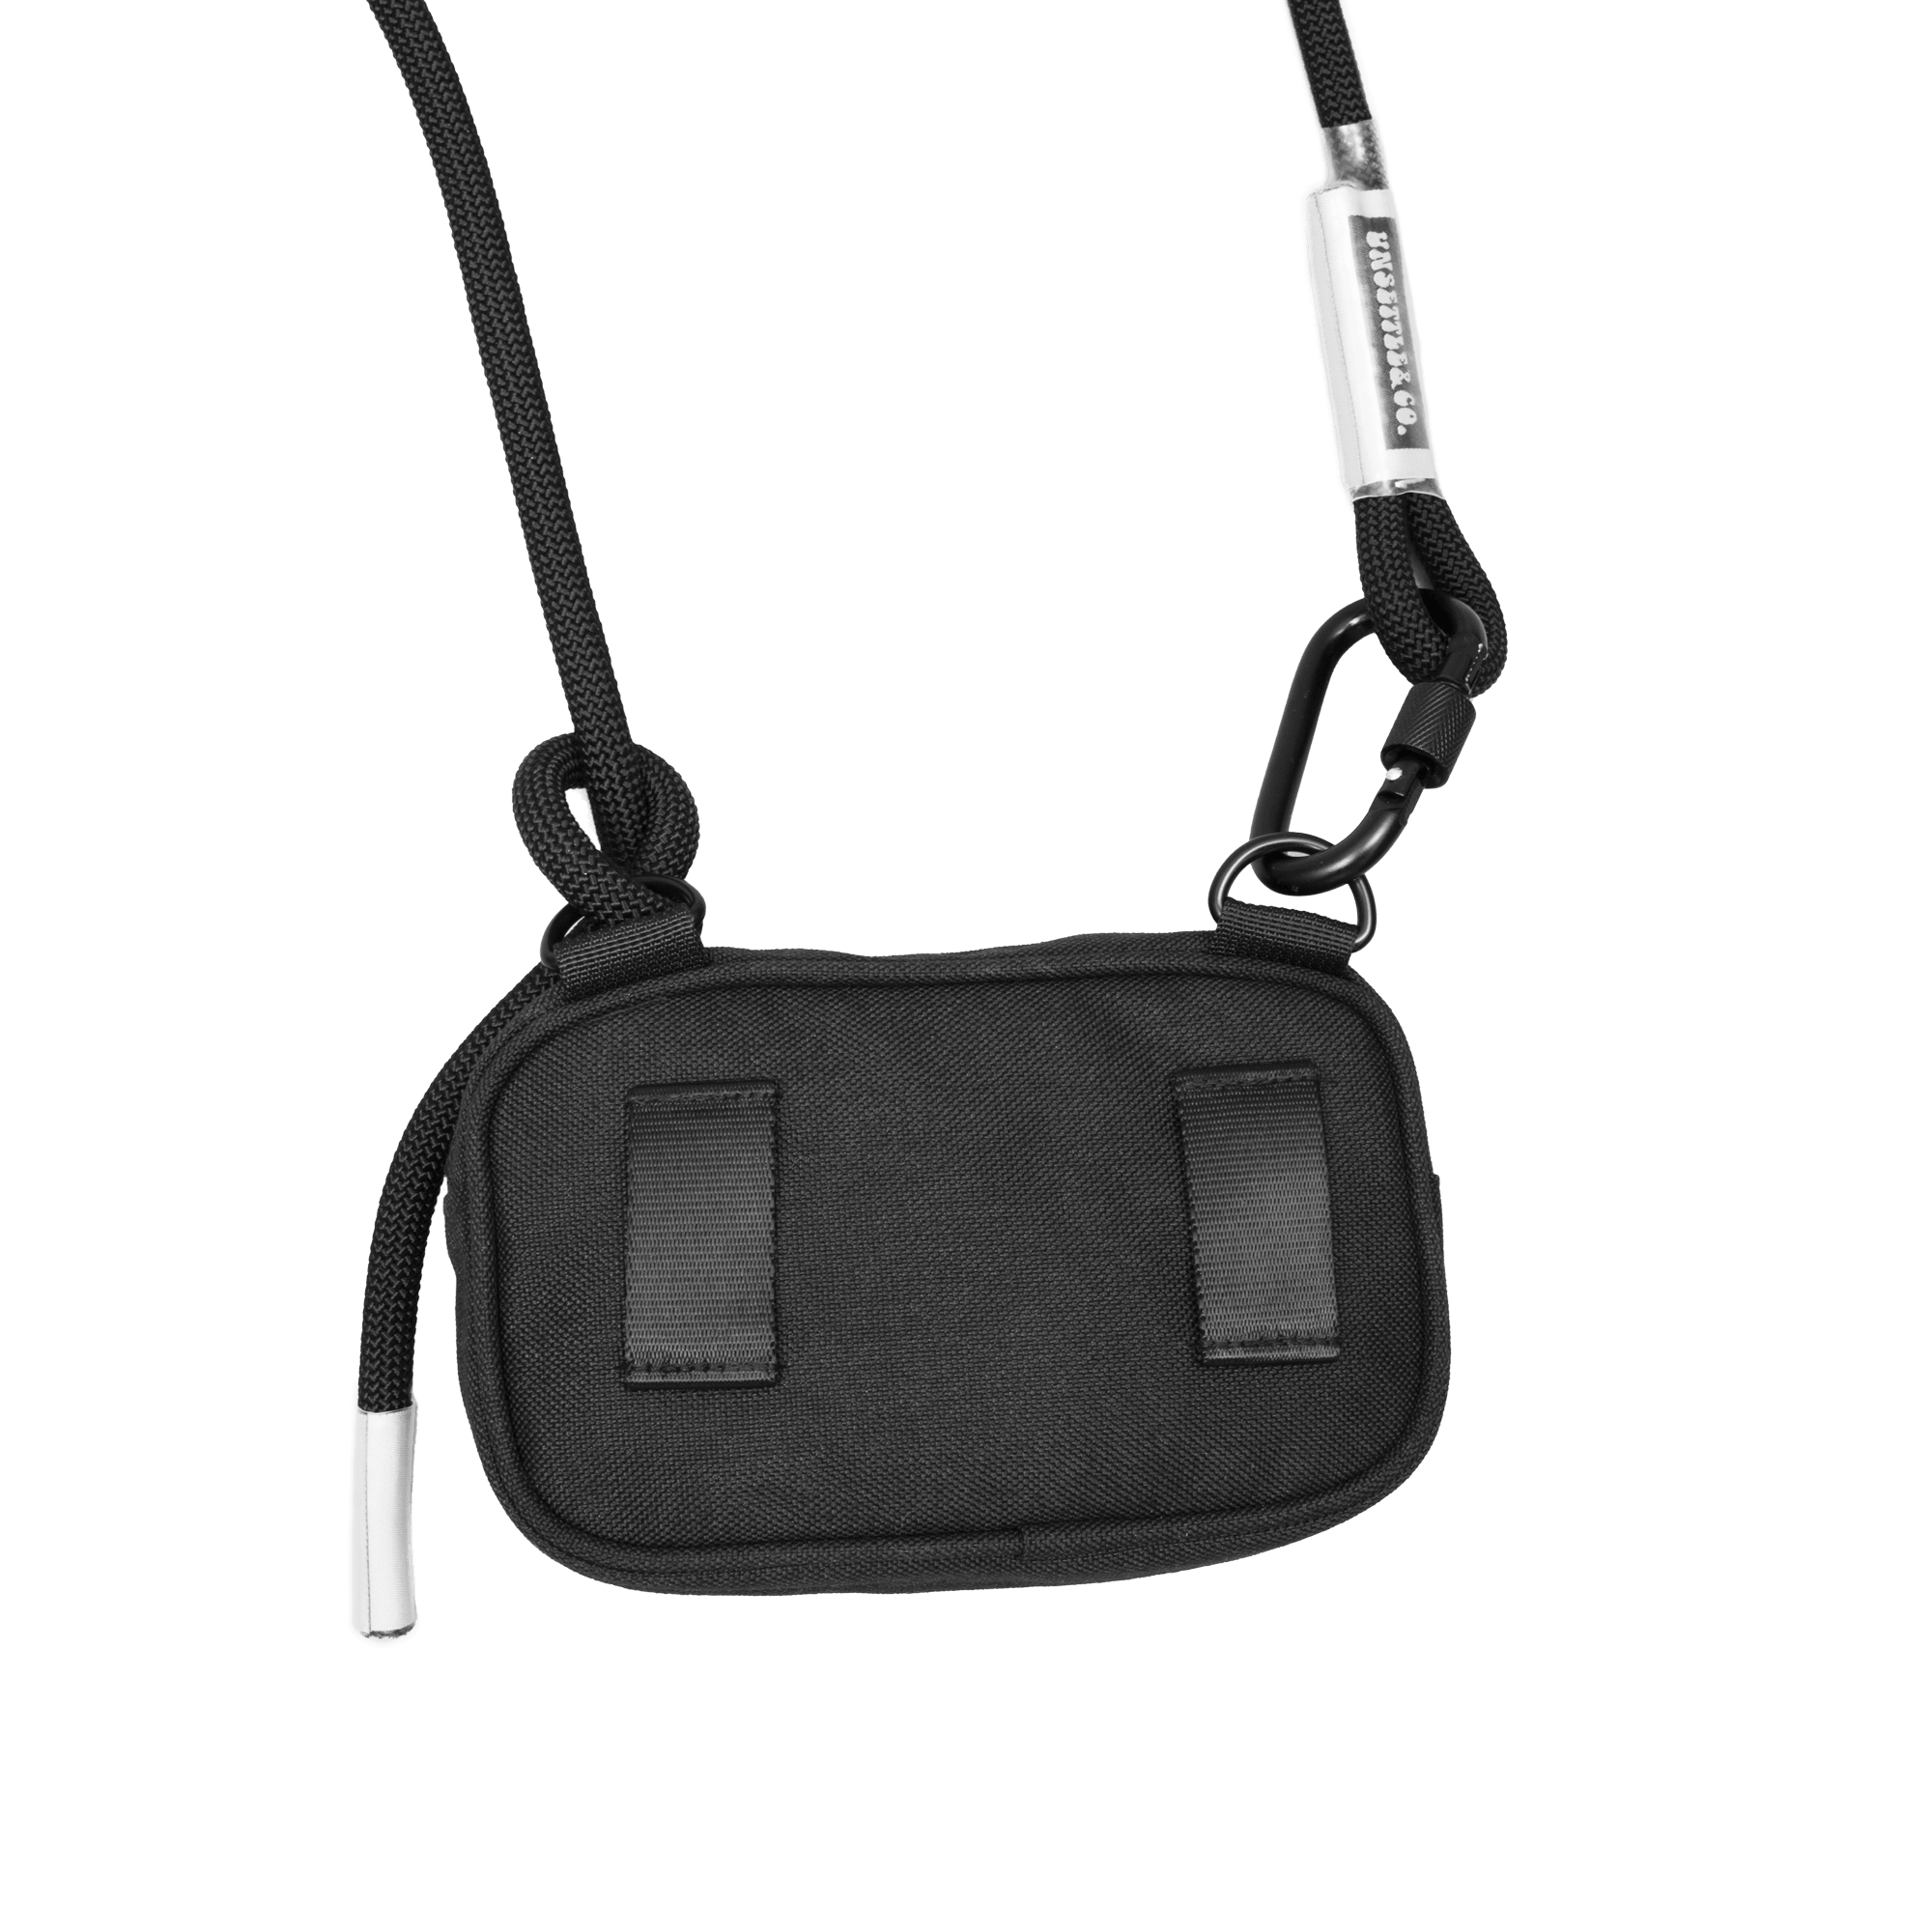 The Harmon Belt Bag – FOUNT